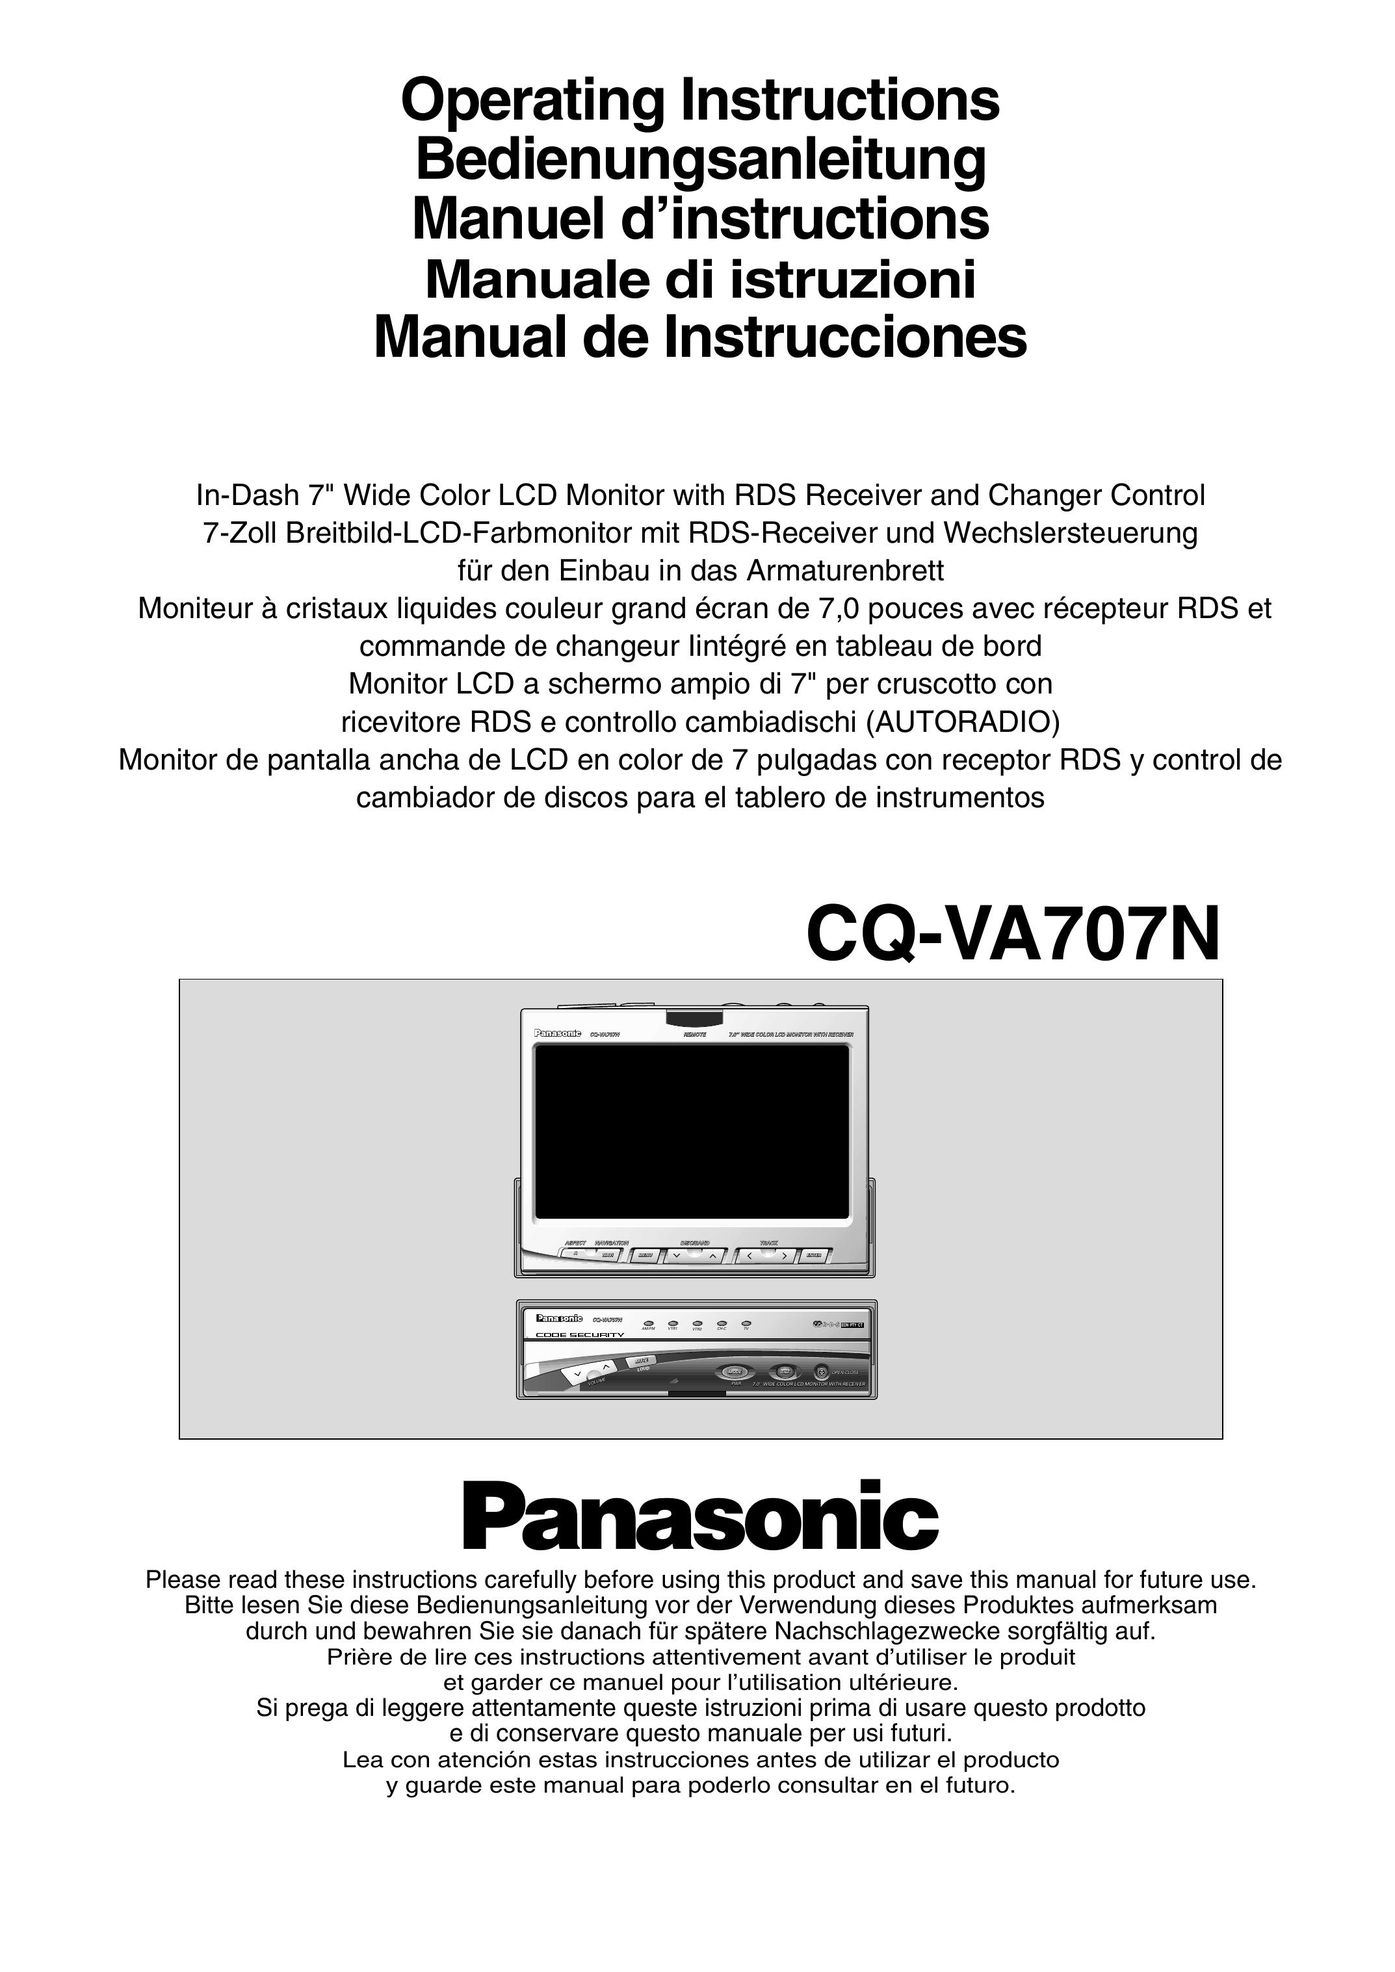 Panasonic CQ-VA707N Car Video System User Manual